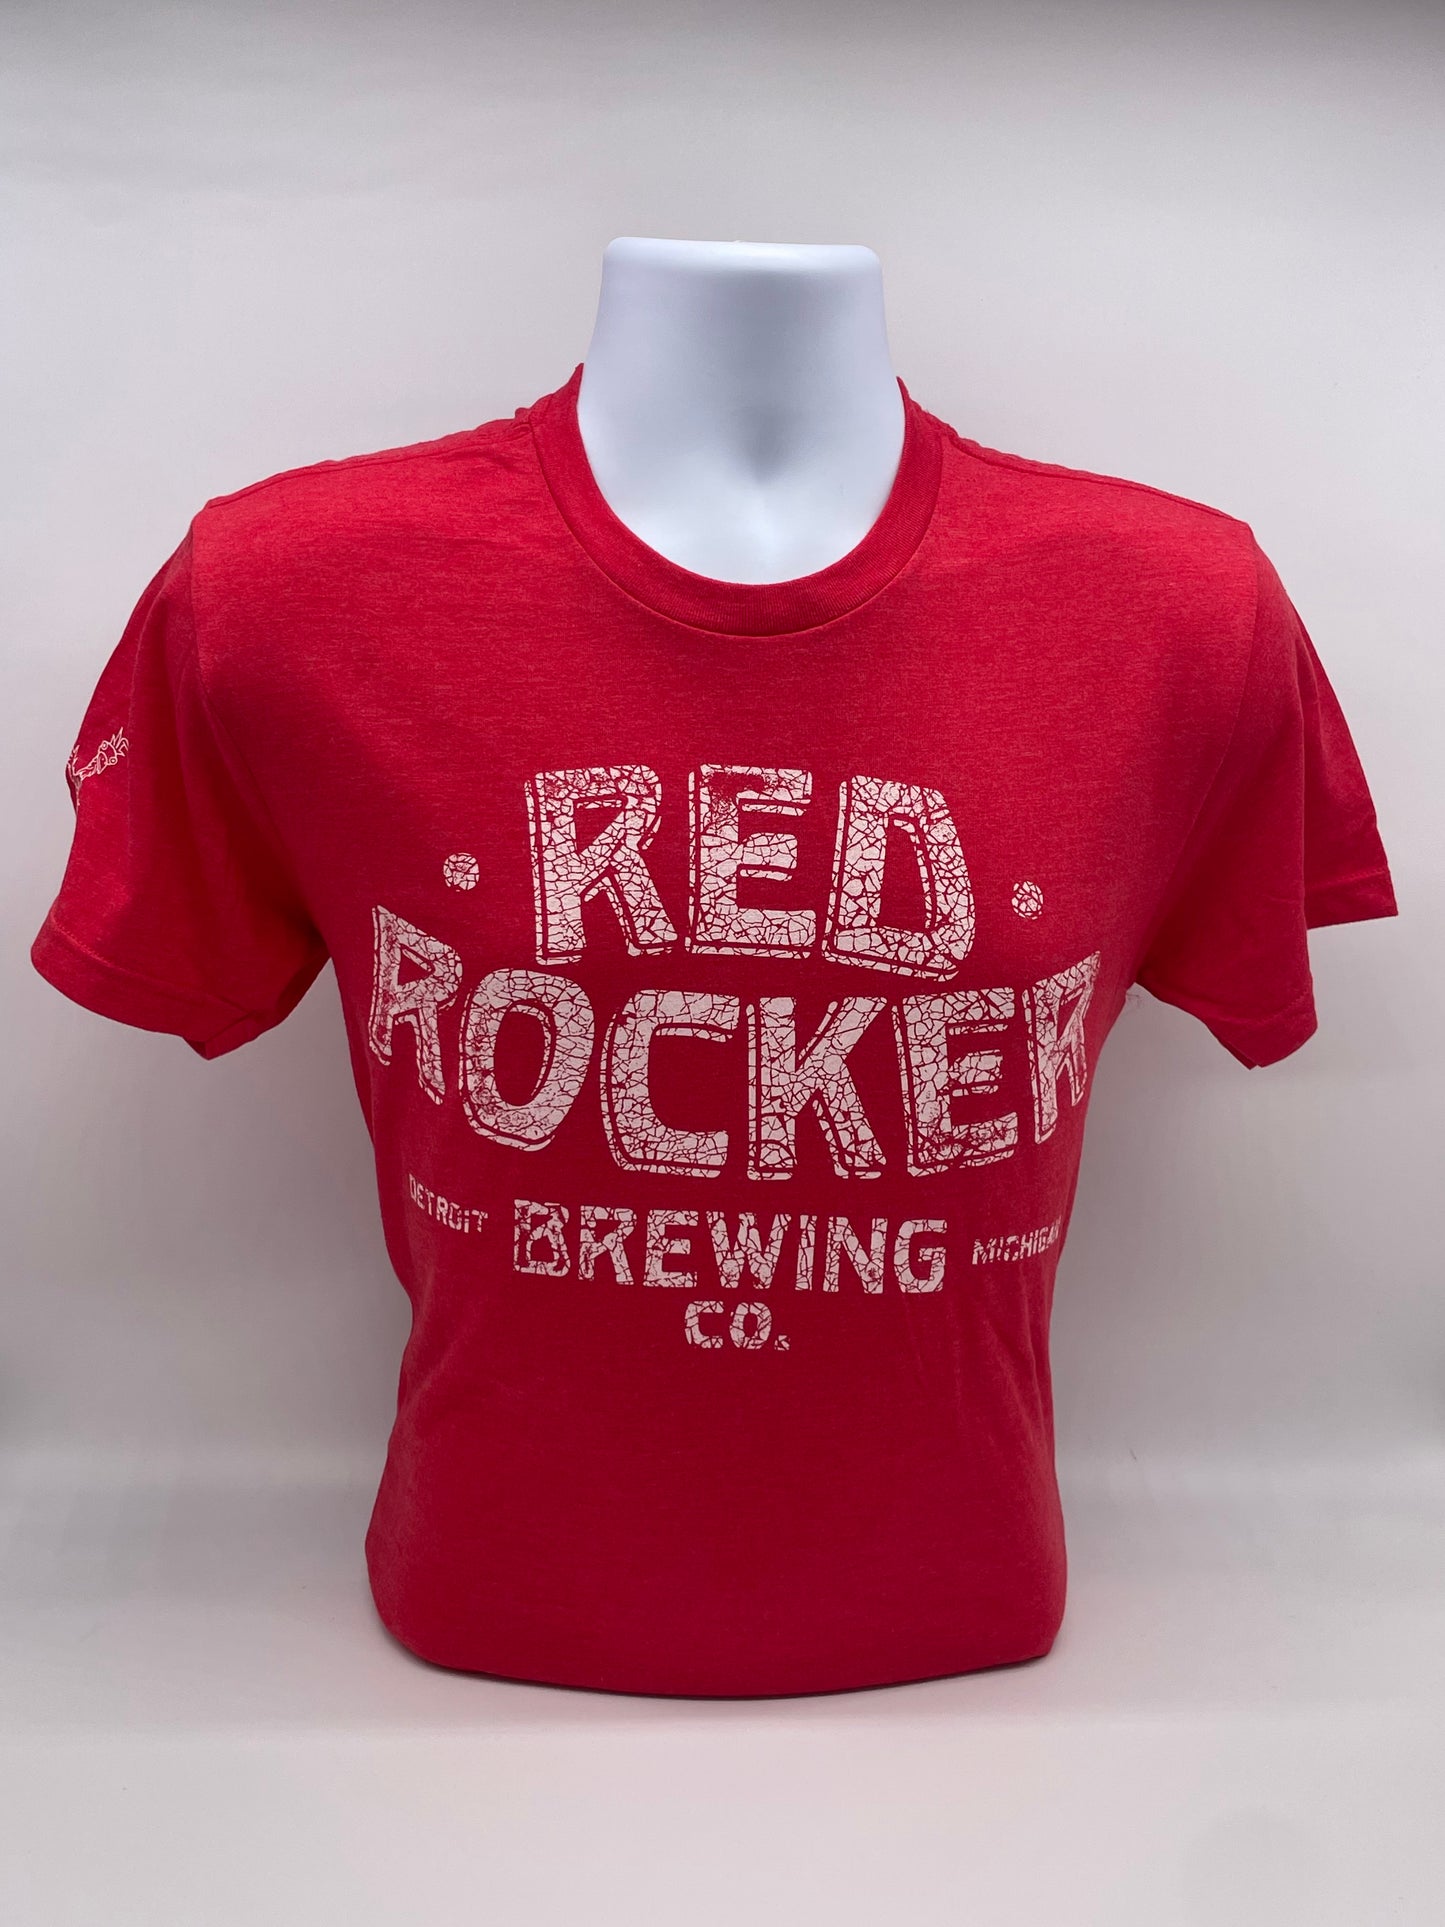 Red Rocker Brewing Co. Writing T-shirt